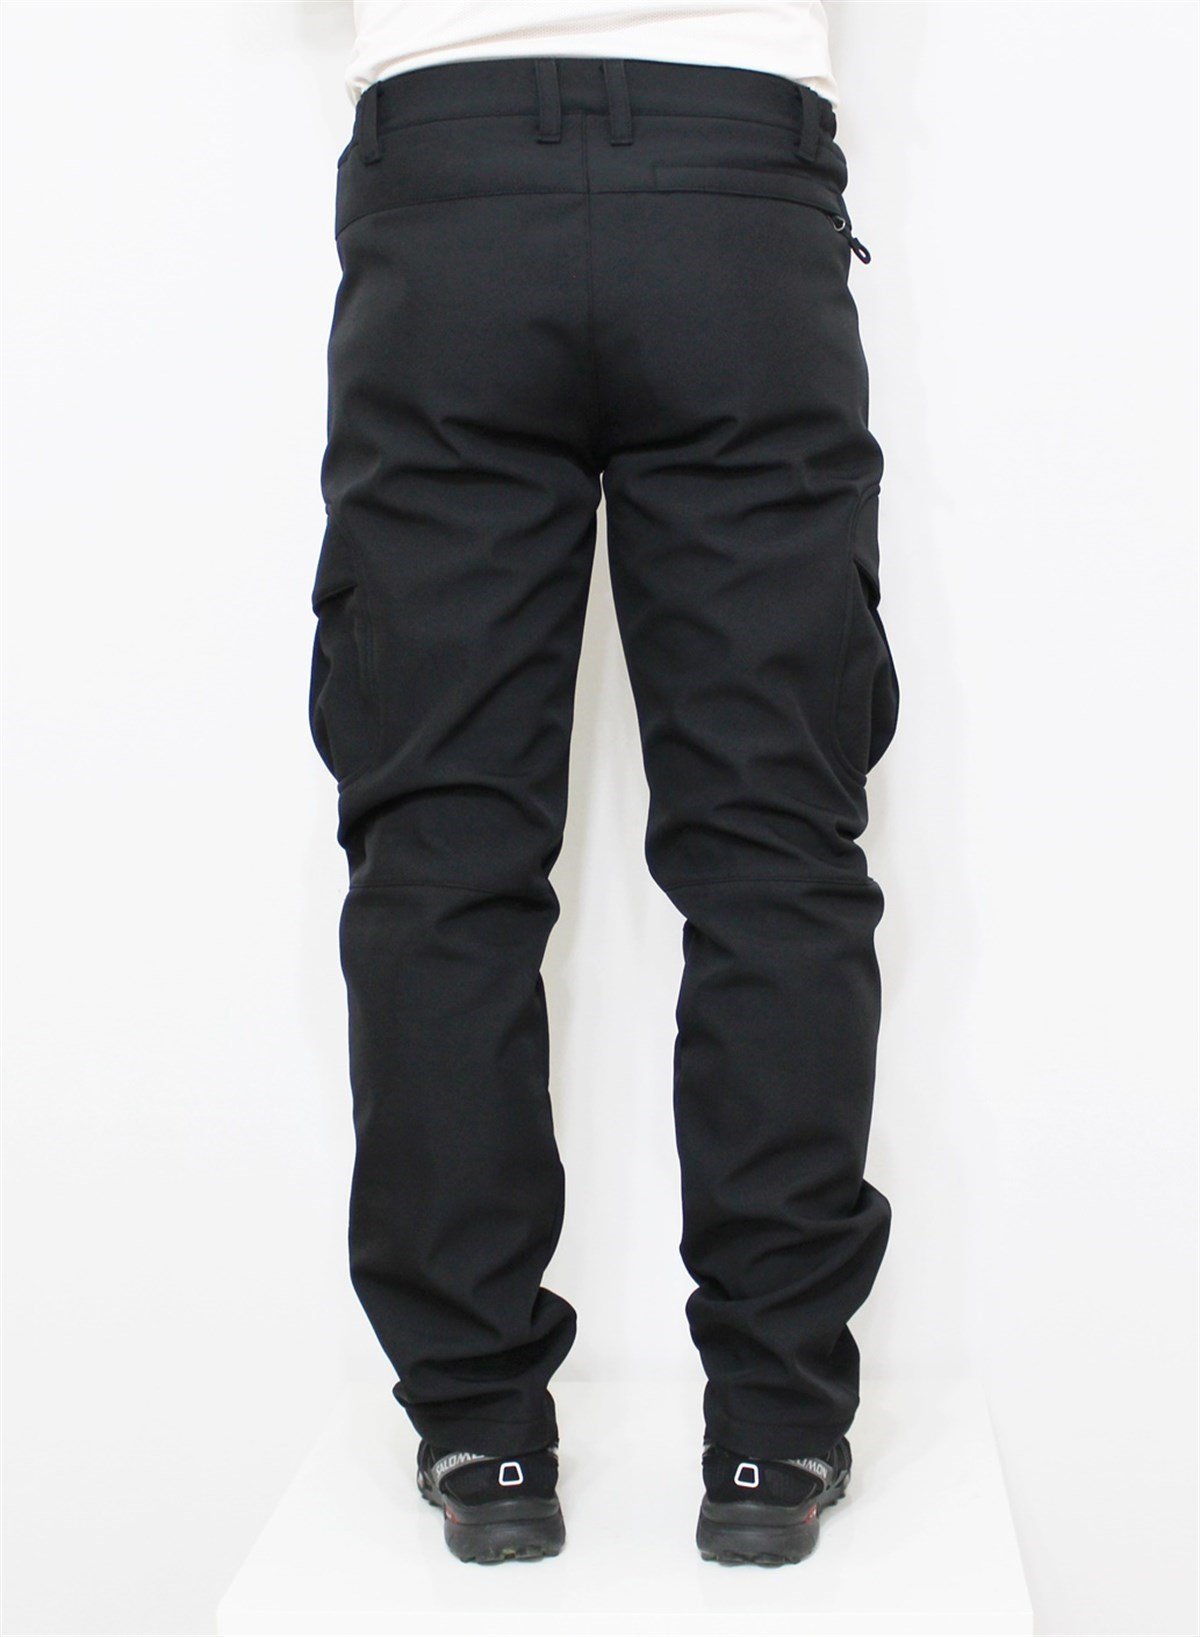 Mudwill Softshell Kargo Cepli Kışlık Erkek Pantolon-Siyah 300201